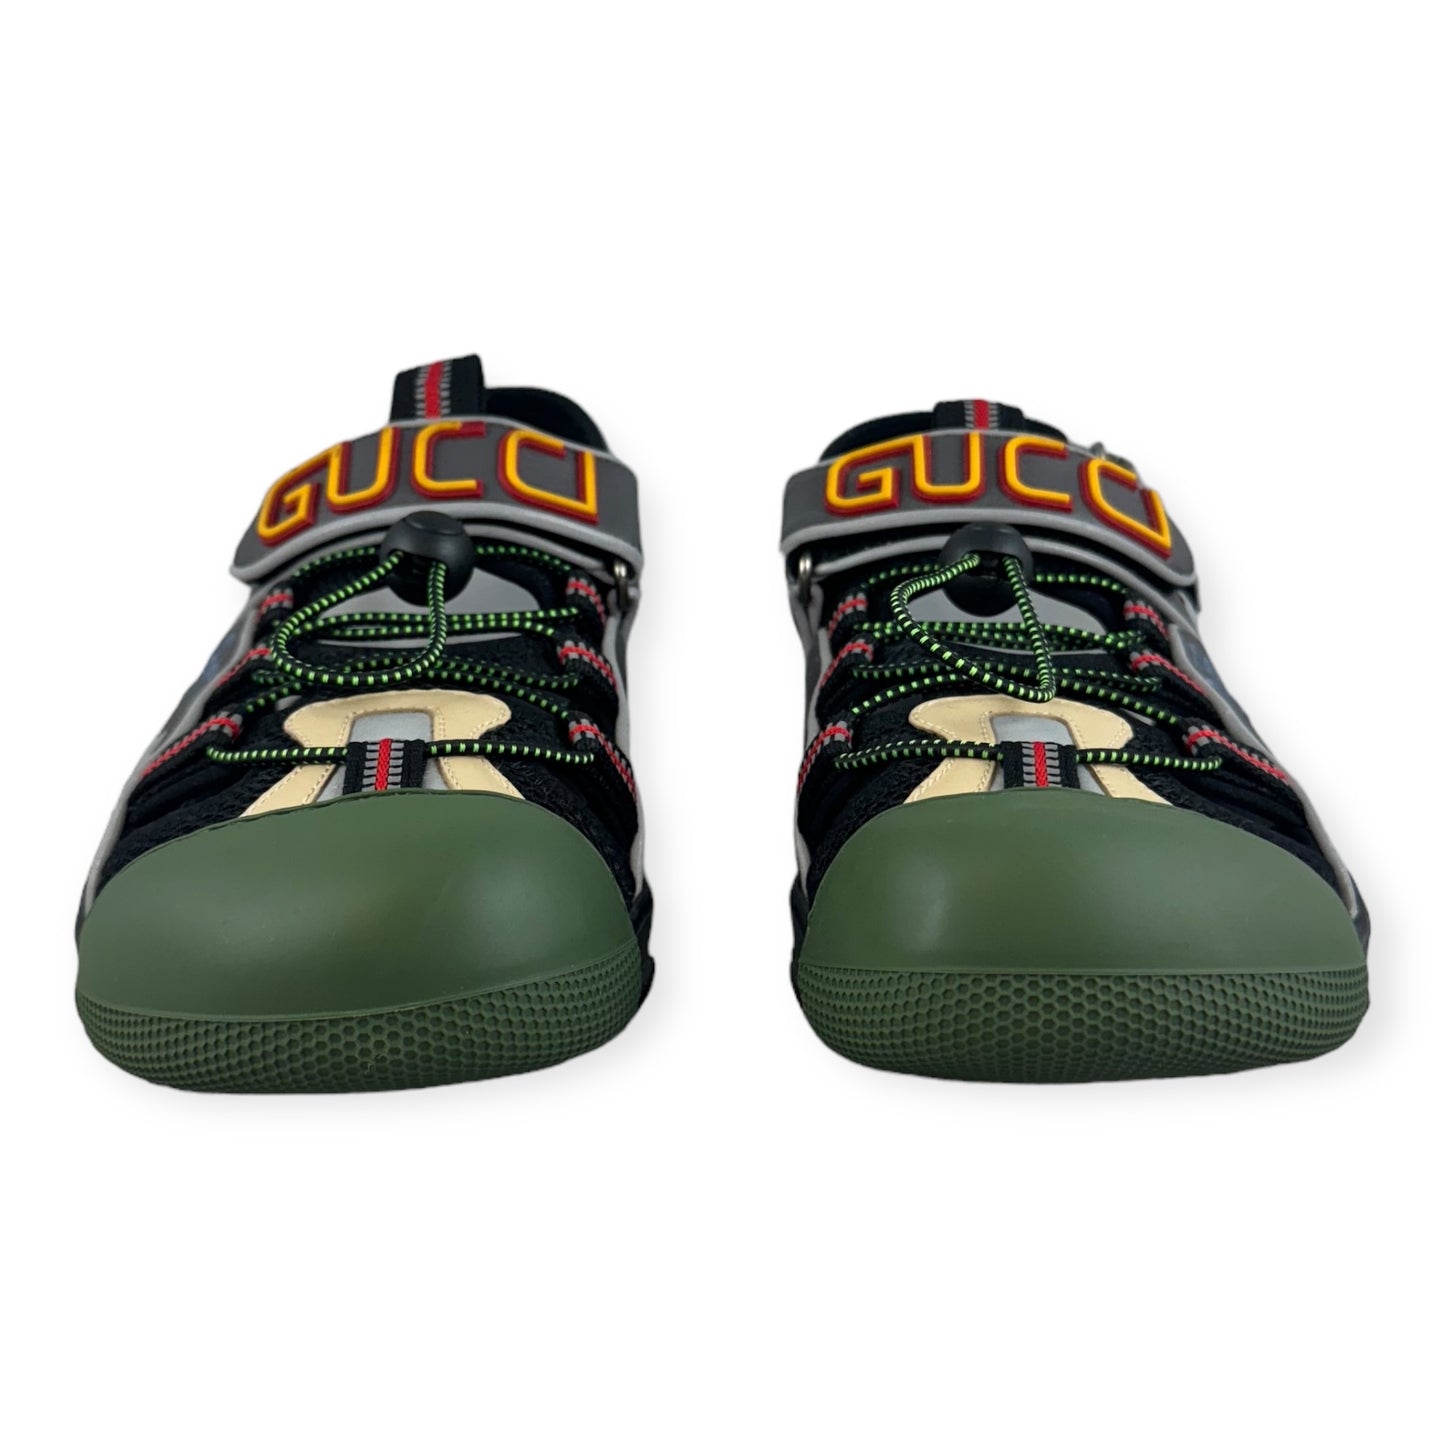 GUCCI Sport Sandals in Green Multi | Size 8.5